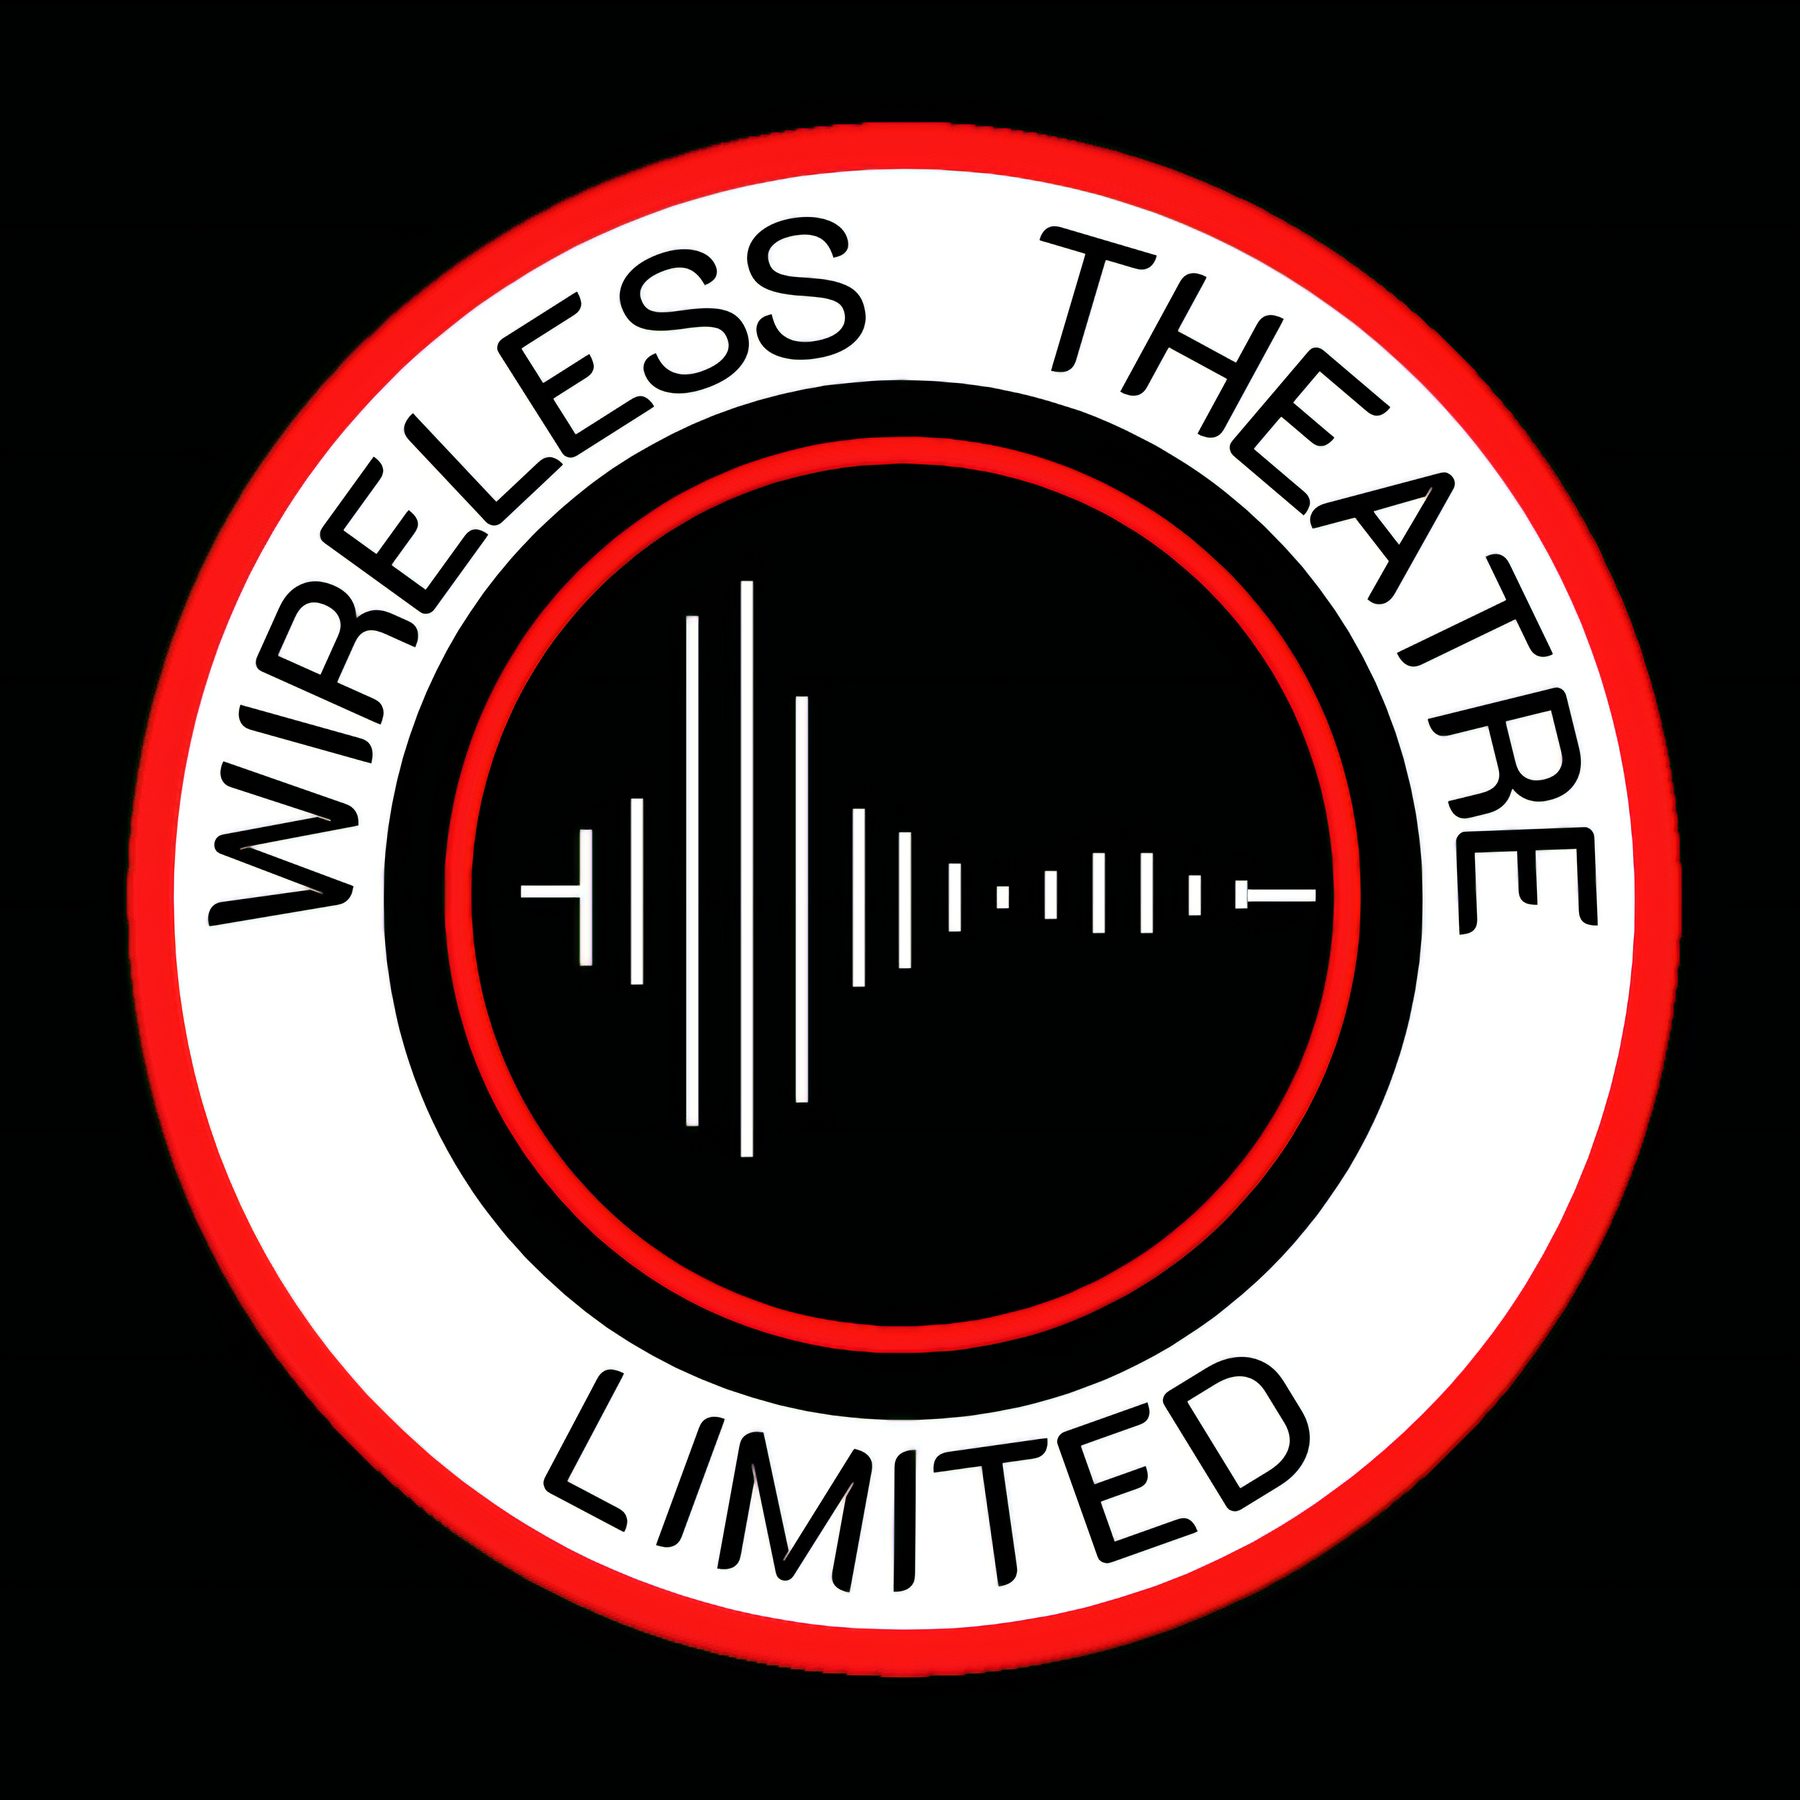 Wireless Theatre Ltd Wireless Originals Audio Drama and podcasts